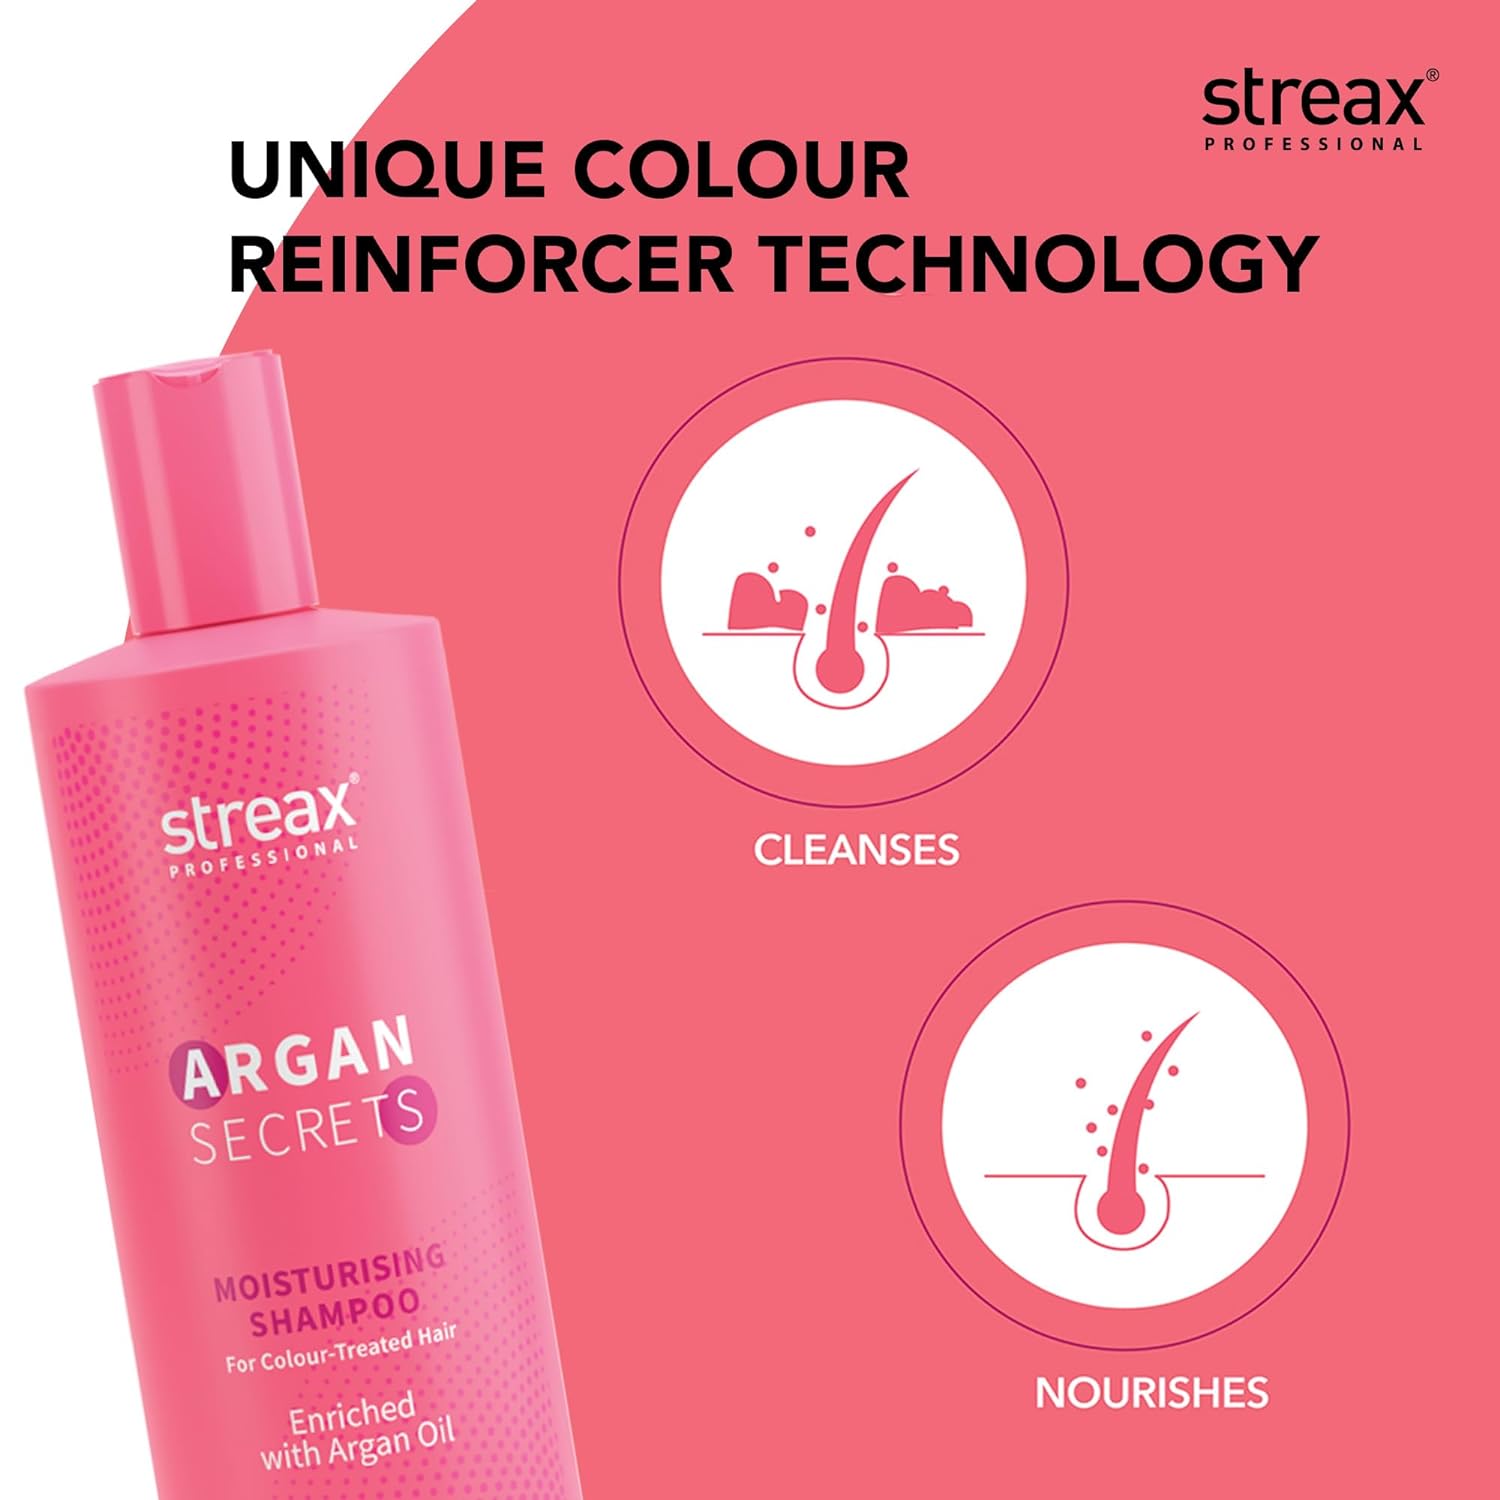 Streax Professional Argan Secrets MOISTURISING Shampoo for Women | Enriched with Argan Oil & UV Filter | Enhances Colour Retention | Cleanses & Nourishes Hair 300ml  from Streax Professional